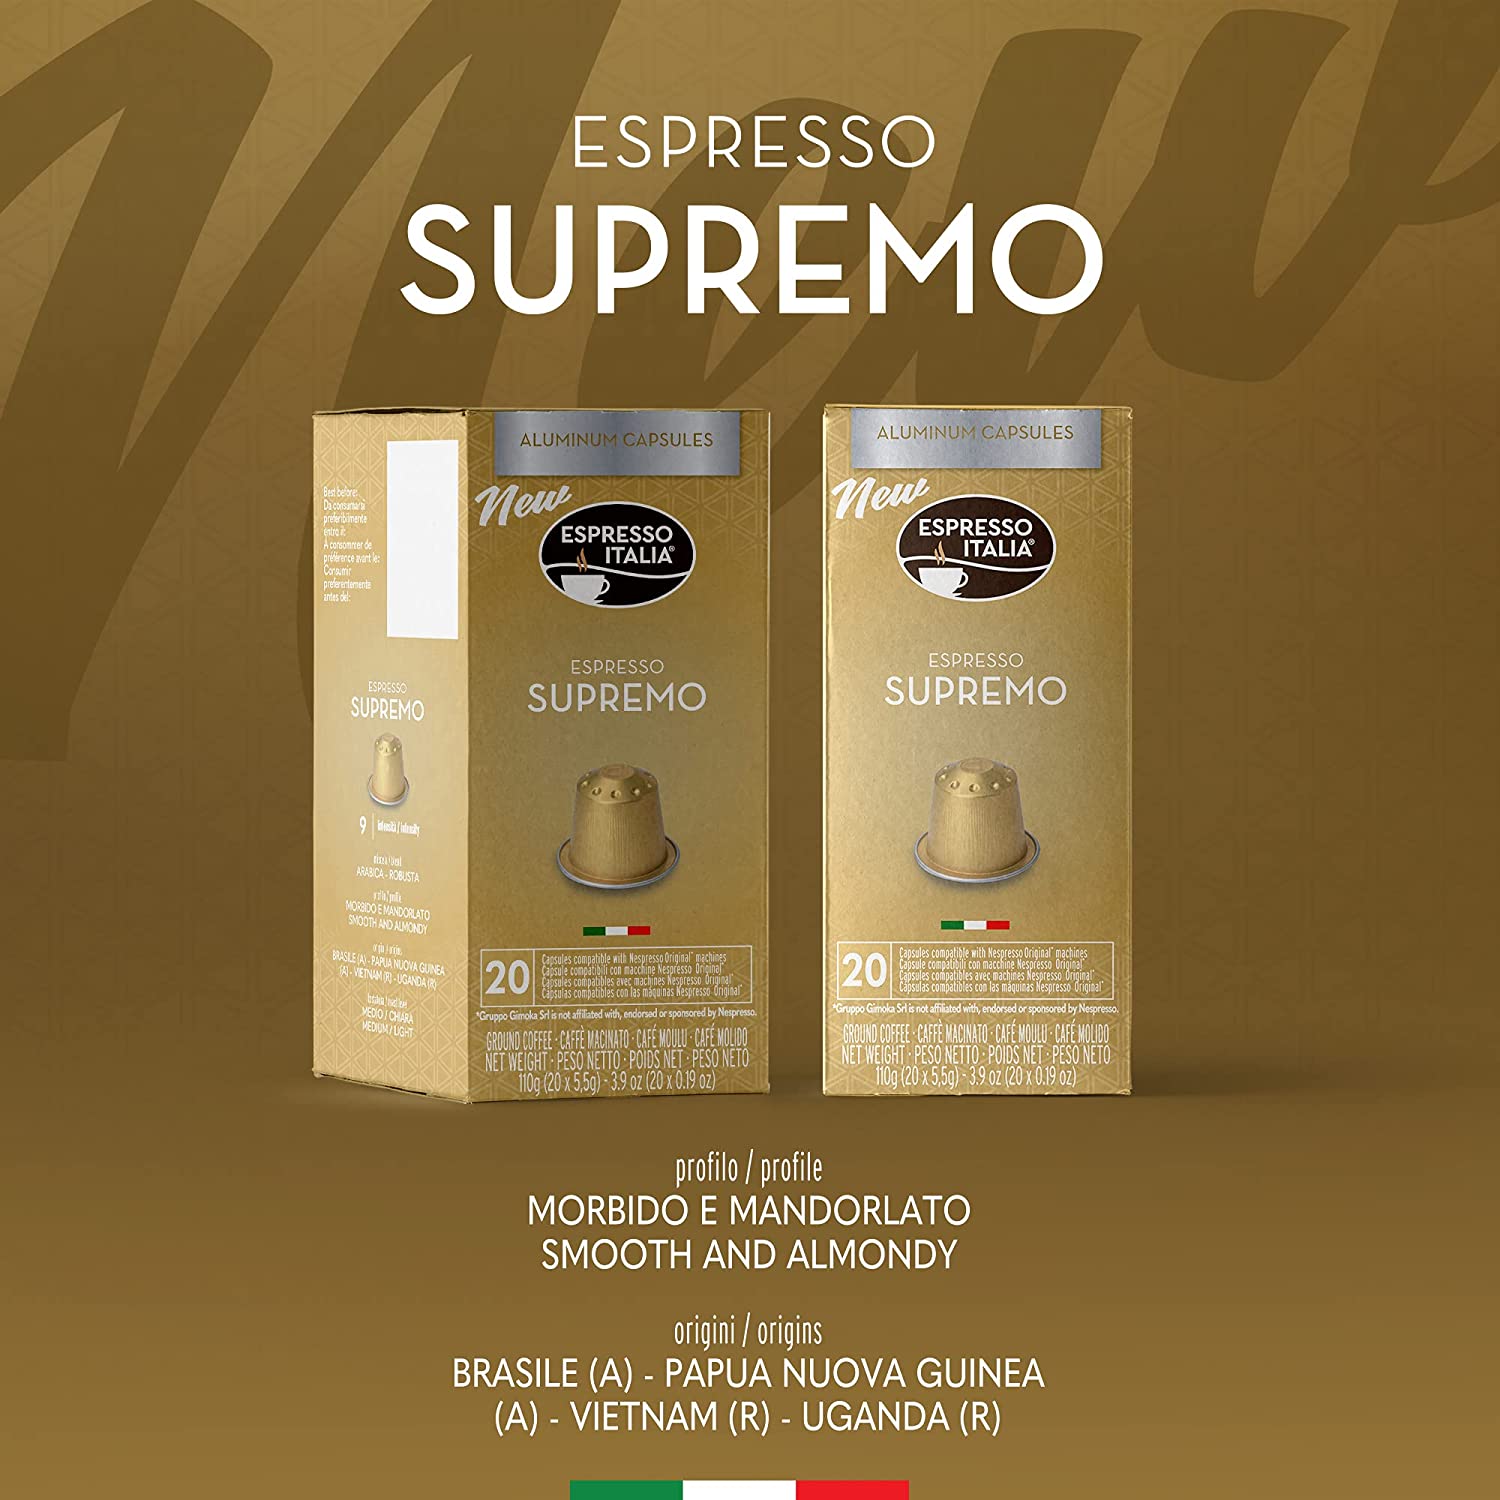 Cápsulas Café Nespresso Pack Best Seller X 100